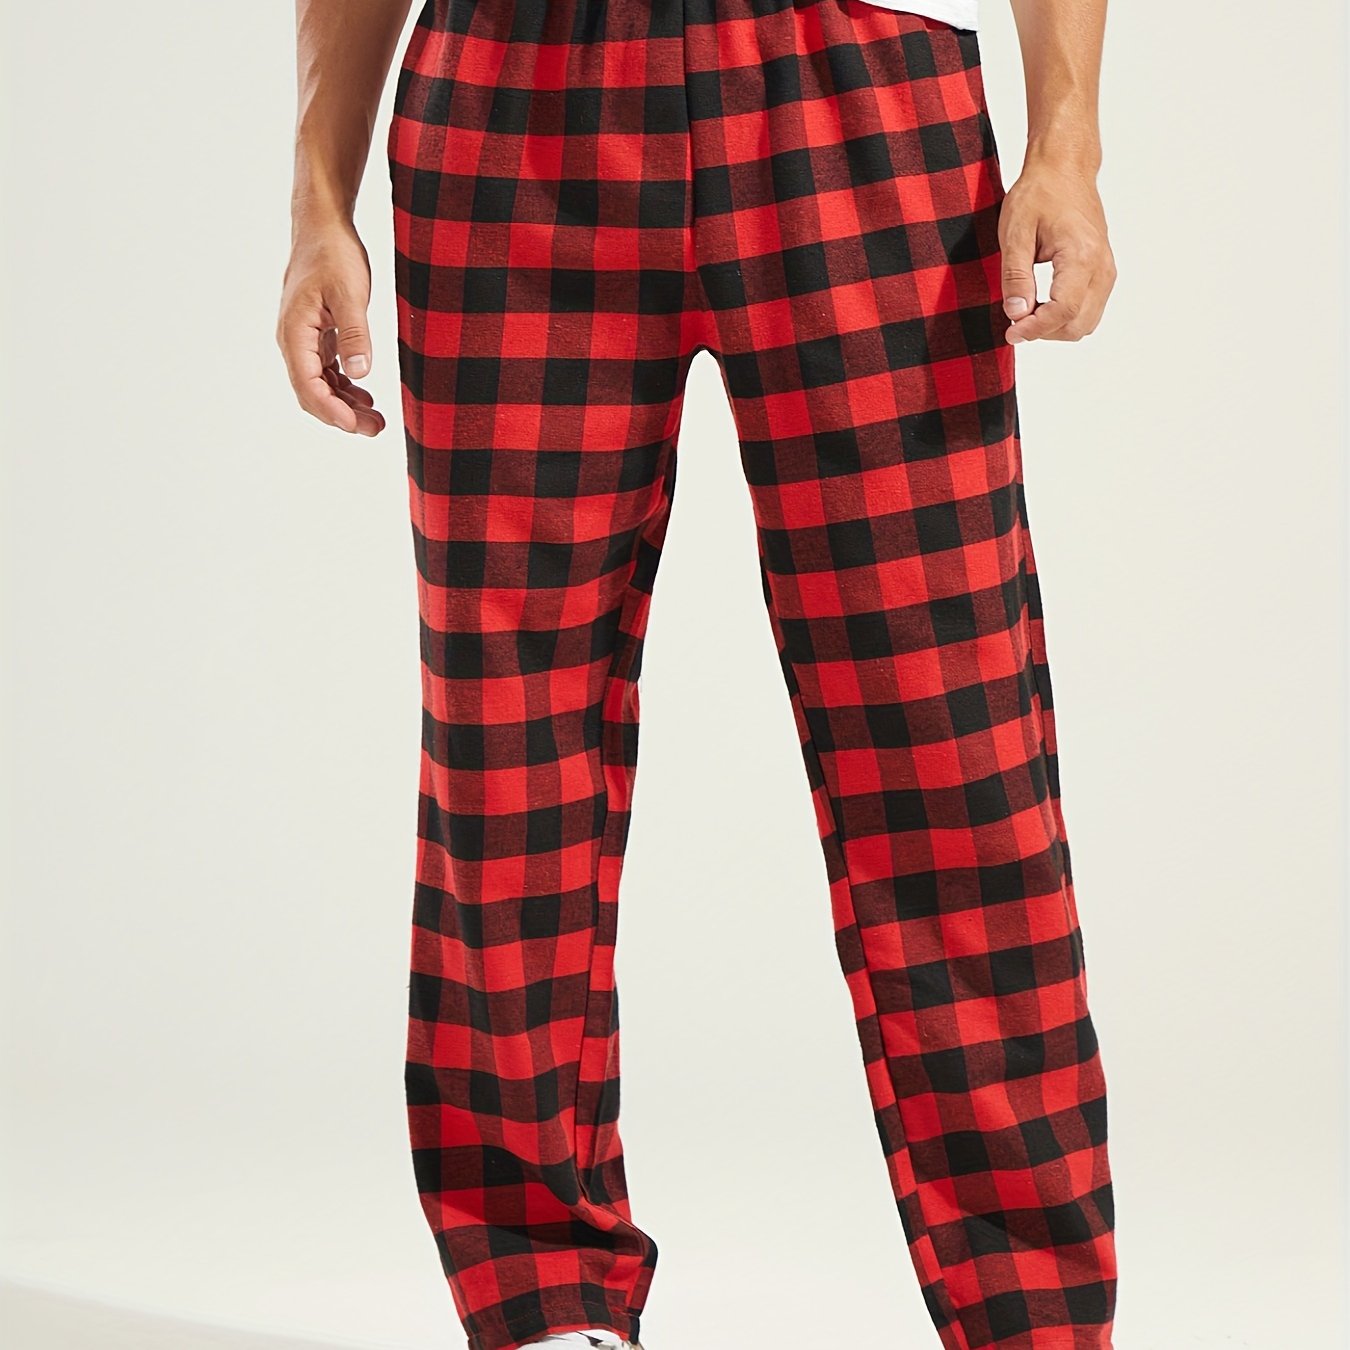 Men's Checkered Wide Leg Pants Beach Pant Trendy  Casual Baggy Pants Yoga Trousers Streetwear Hiphop Rapper Style